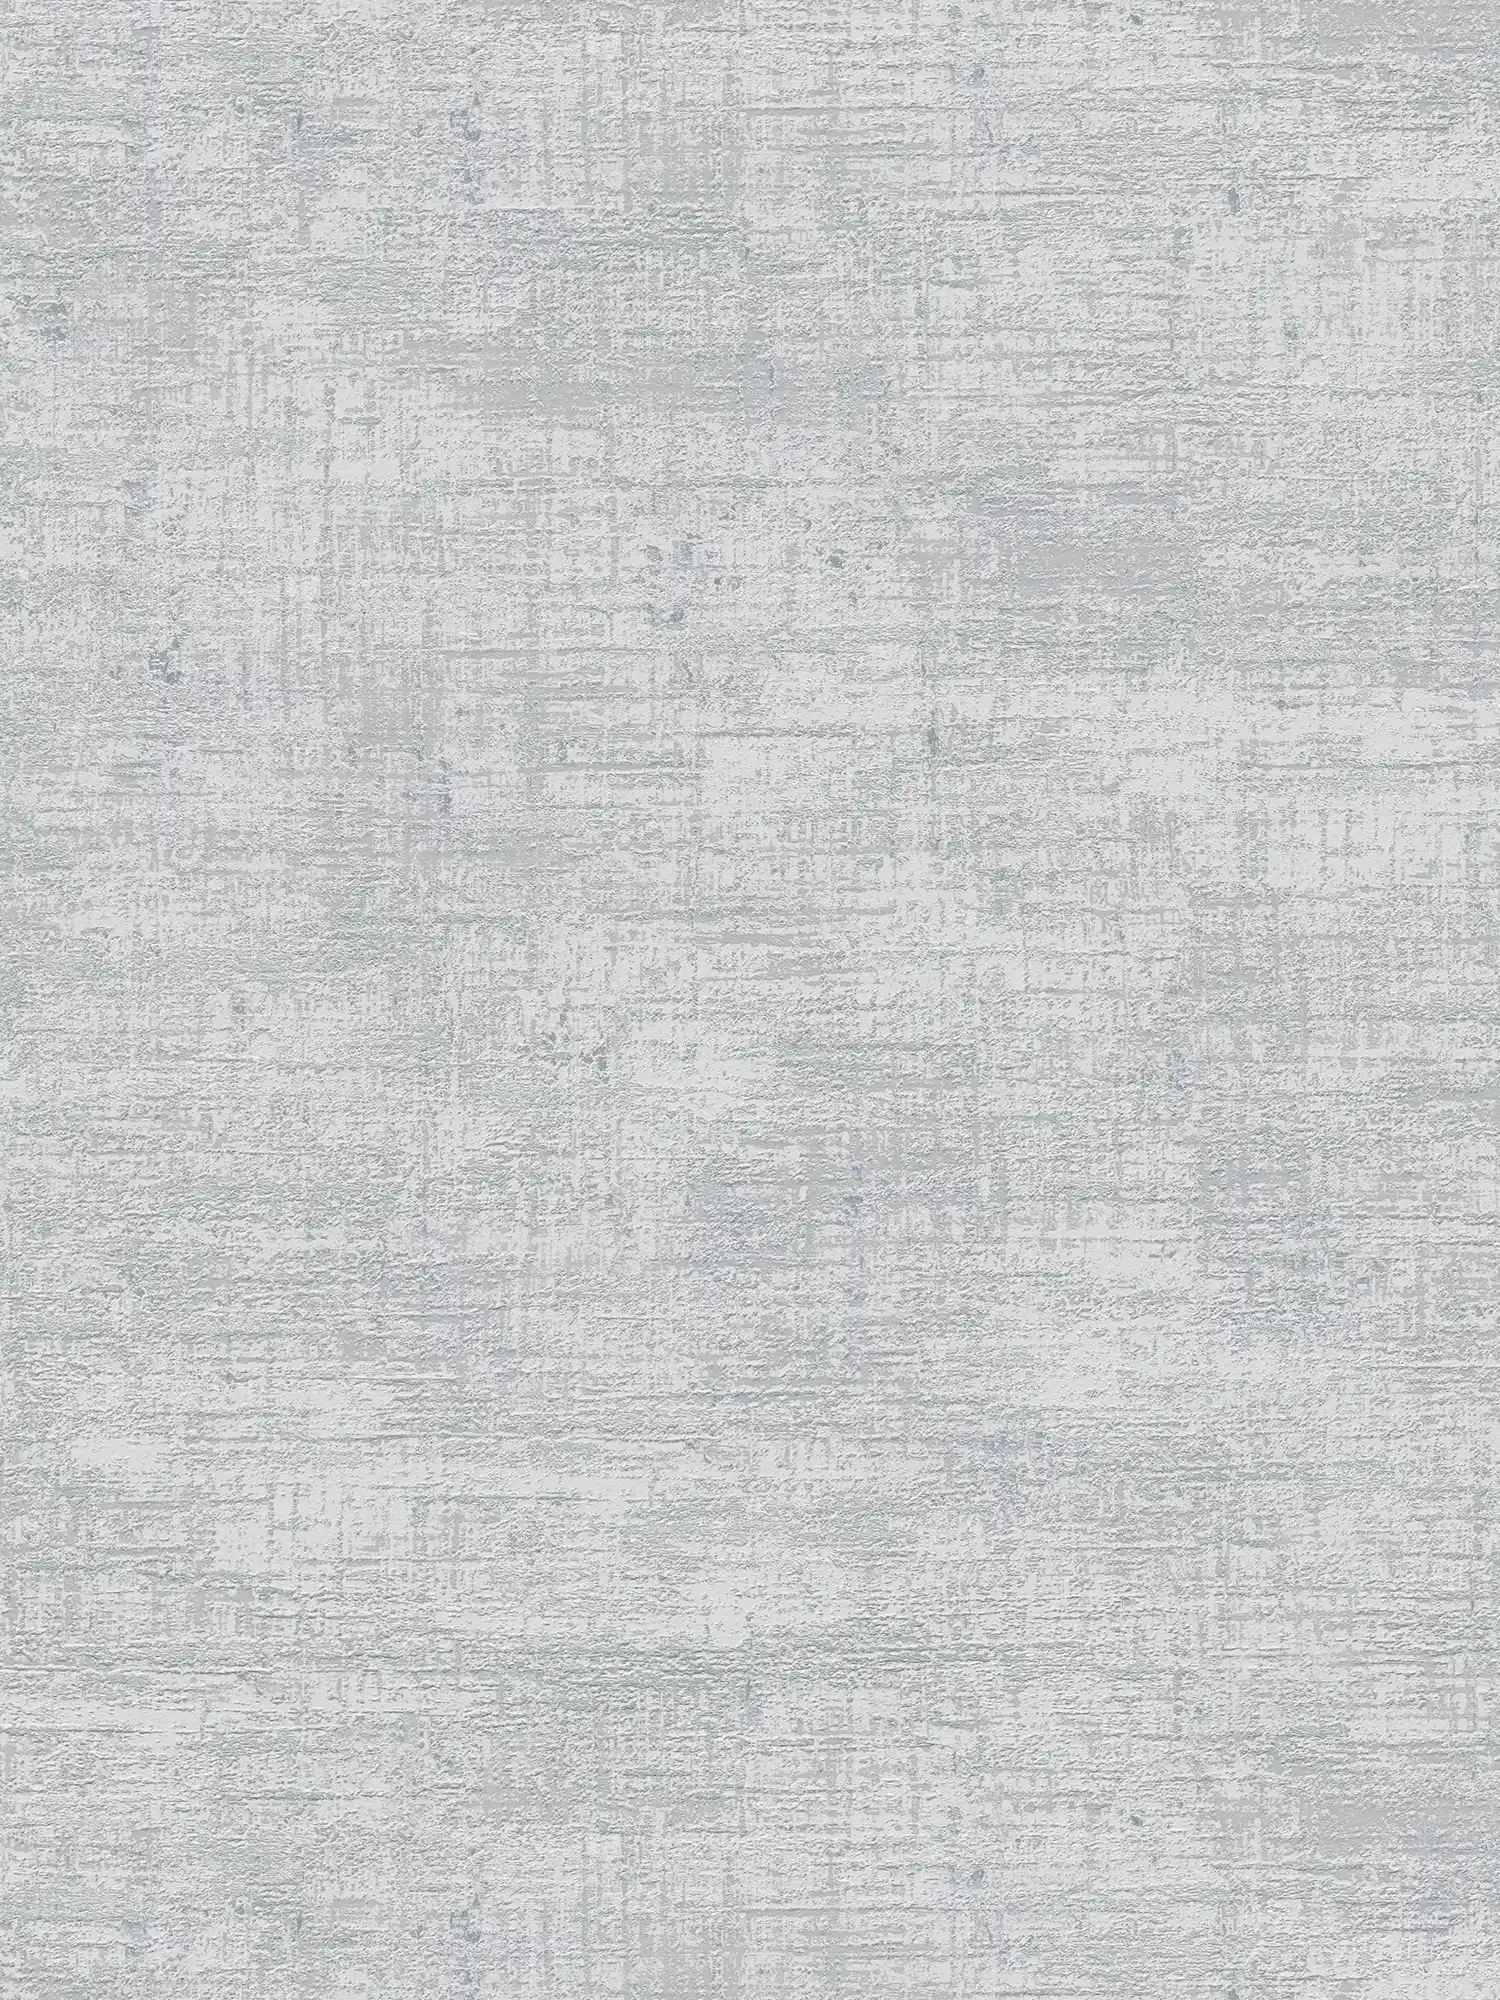 Non-woven wallpaper with metallic accents - grey, silver
